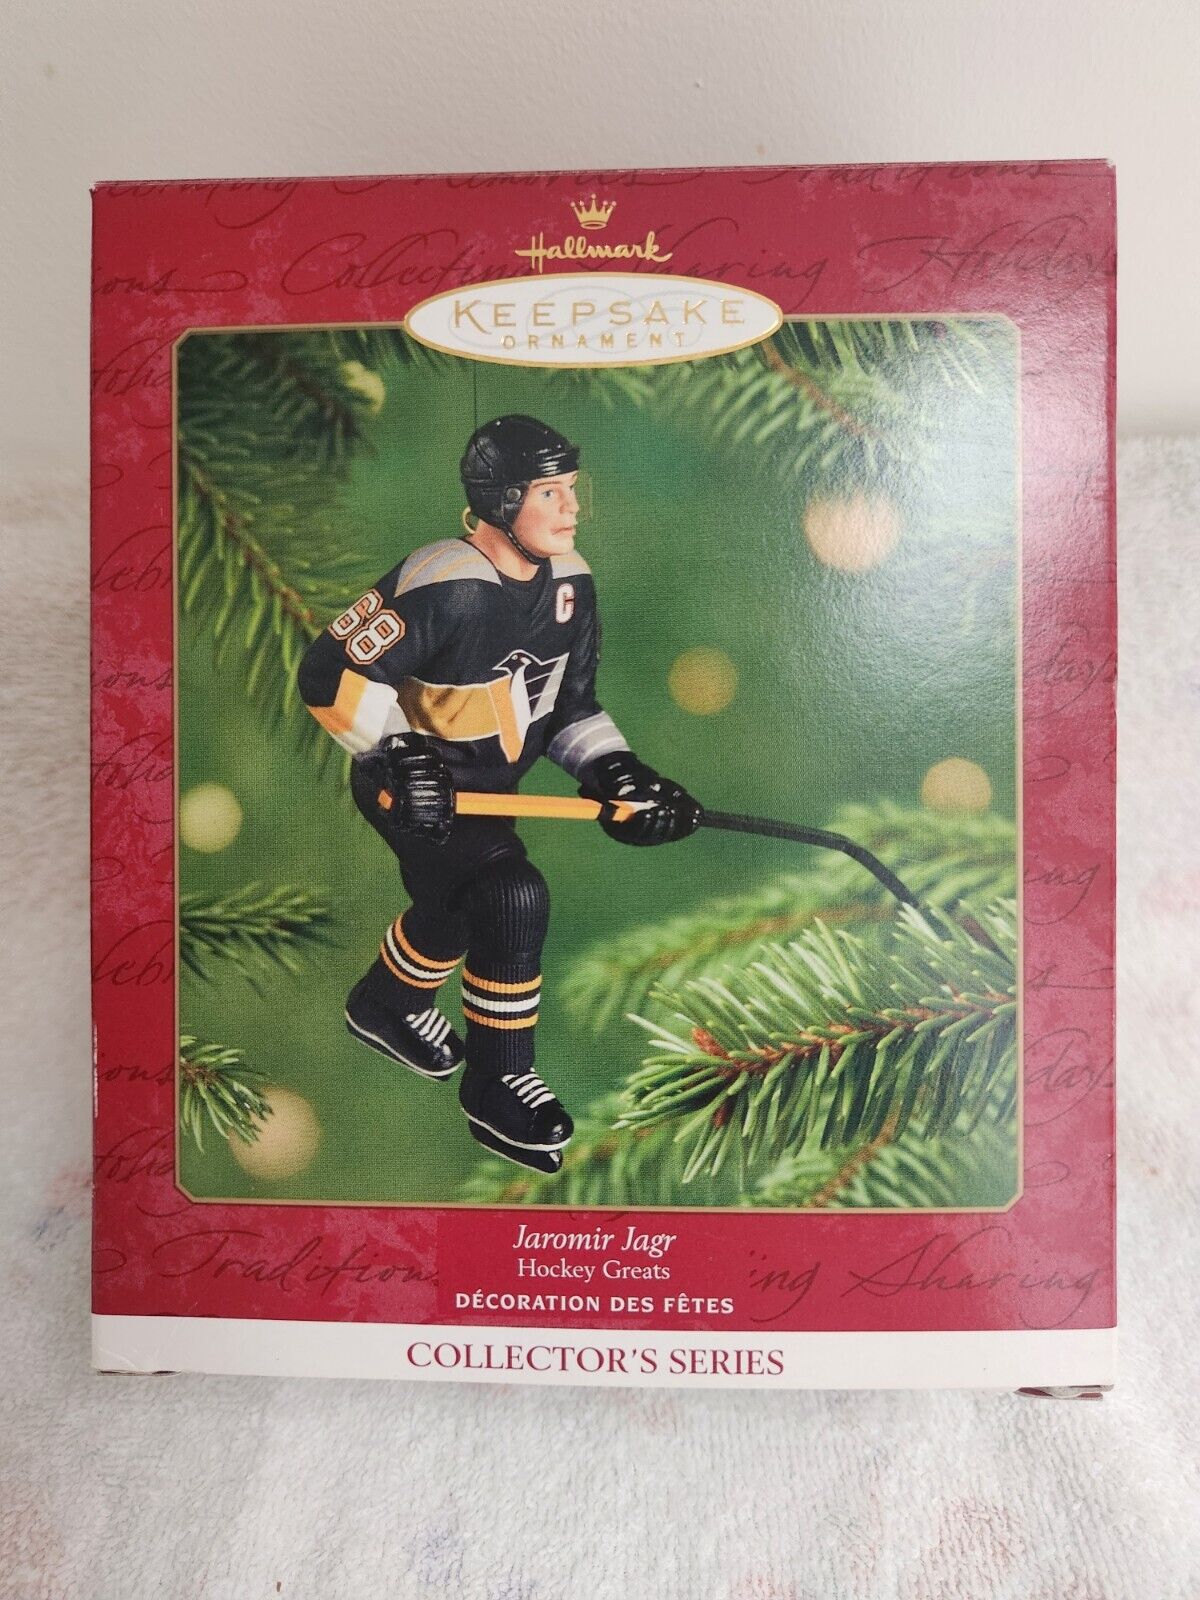 Hallmark Keepsake Ornament Collector's Series JAROMIR JAGR Hockey Greats 2001 